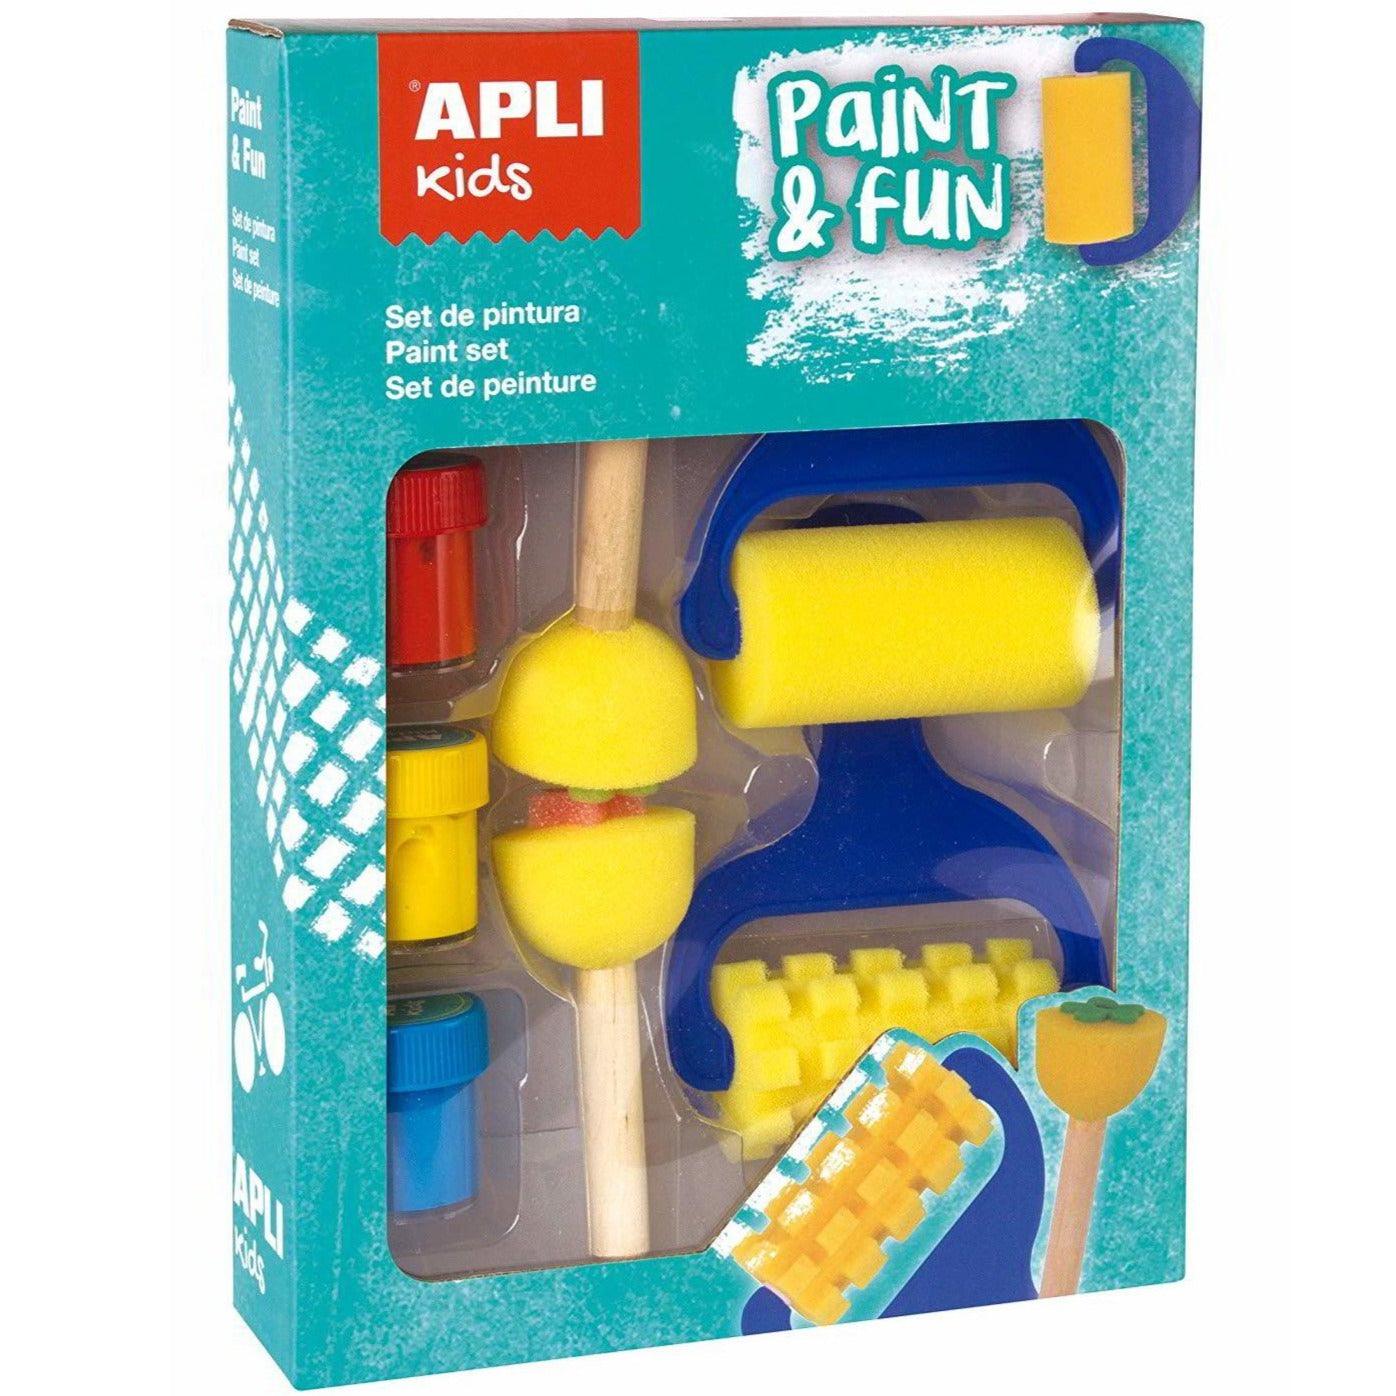 Apli Kids: Paint & Fun stempler og malerruller